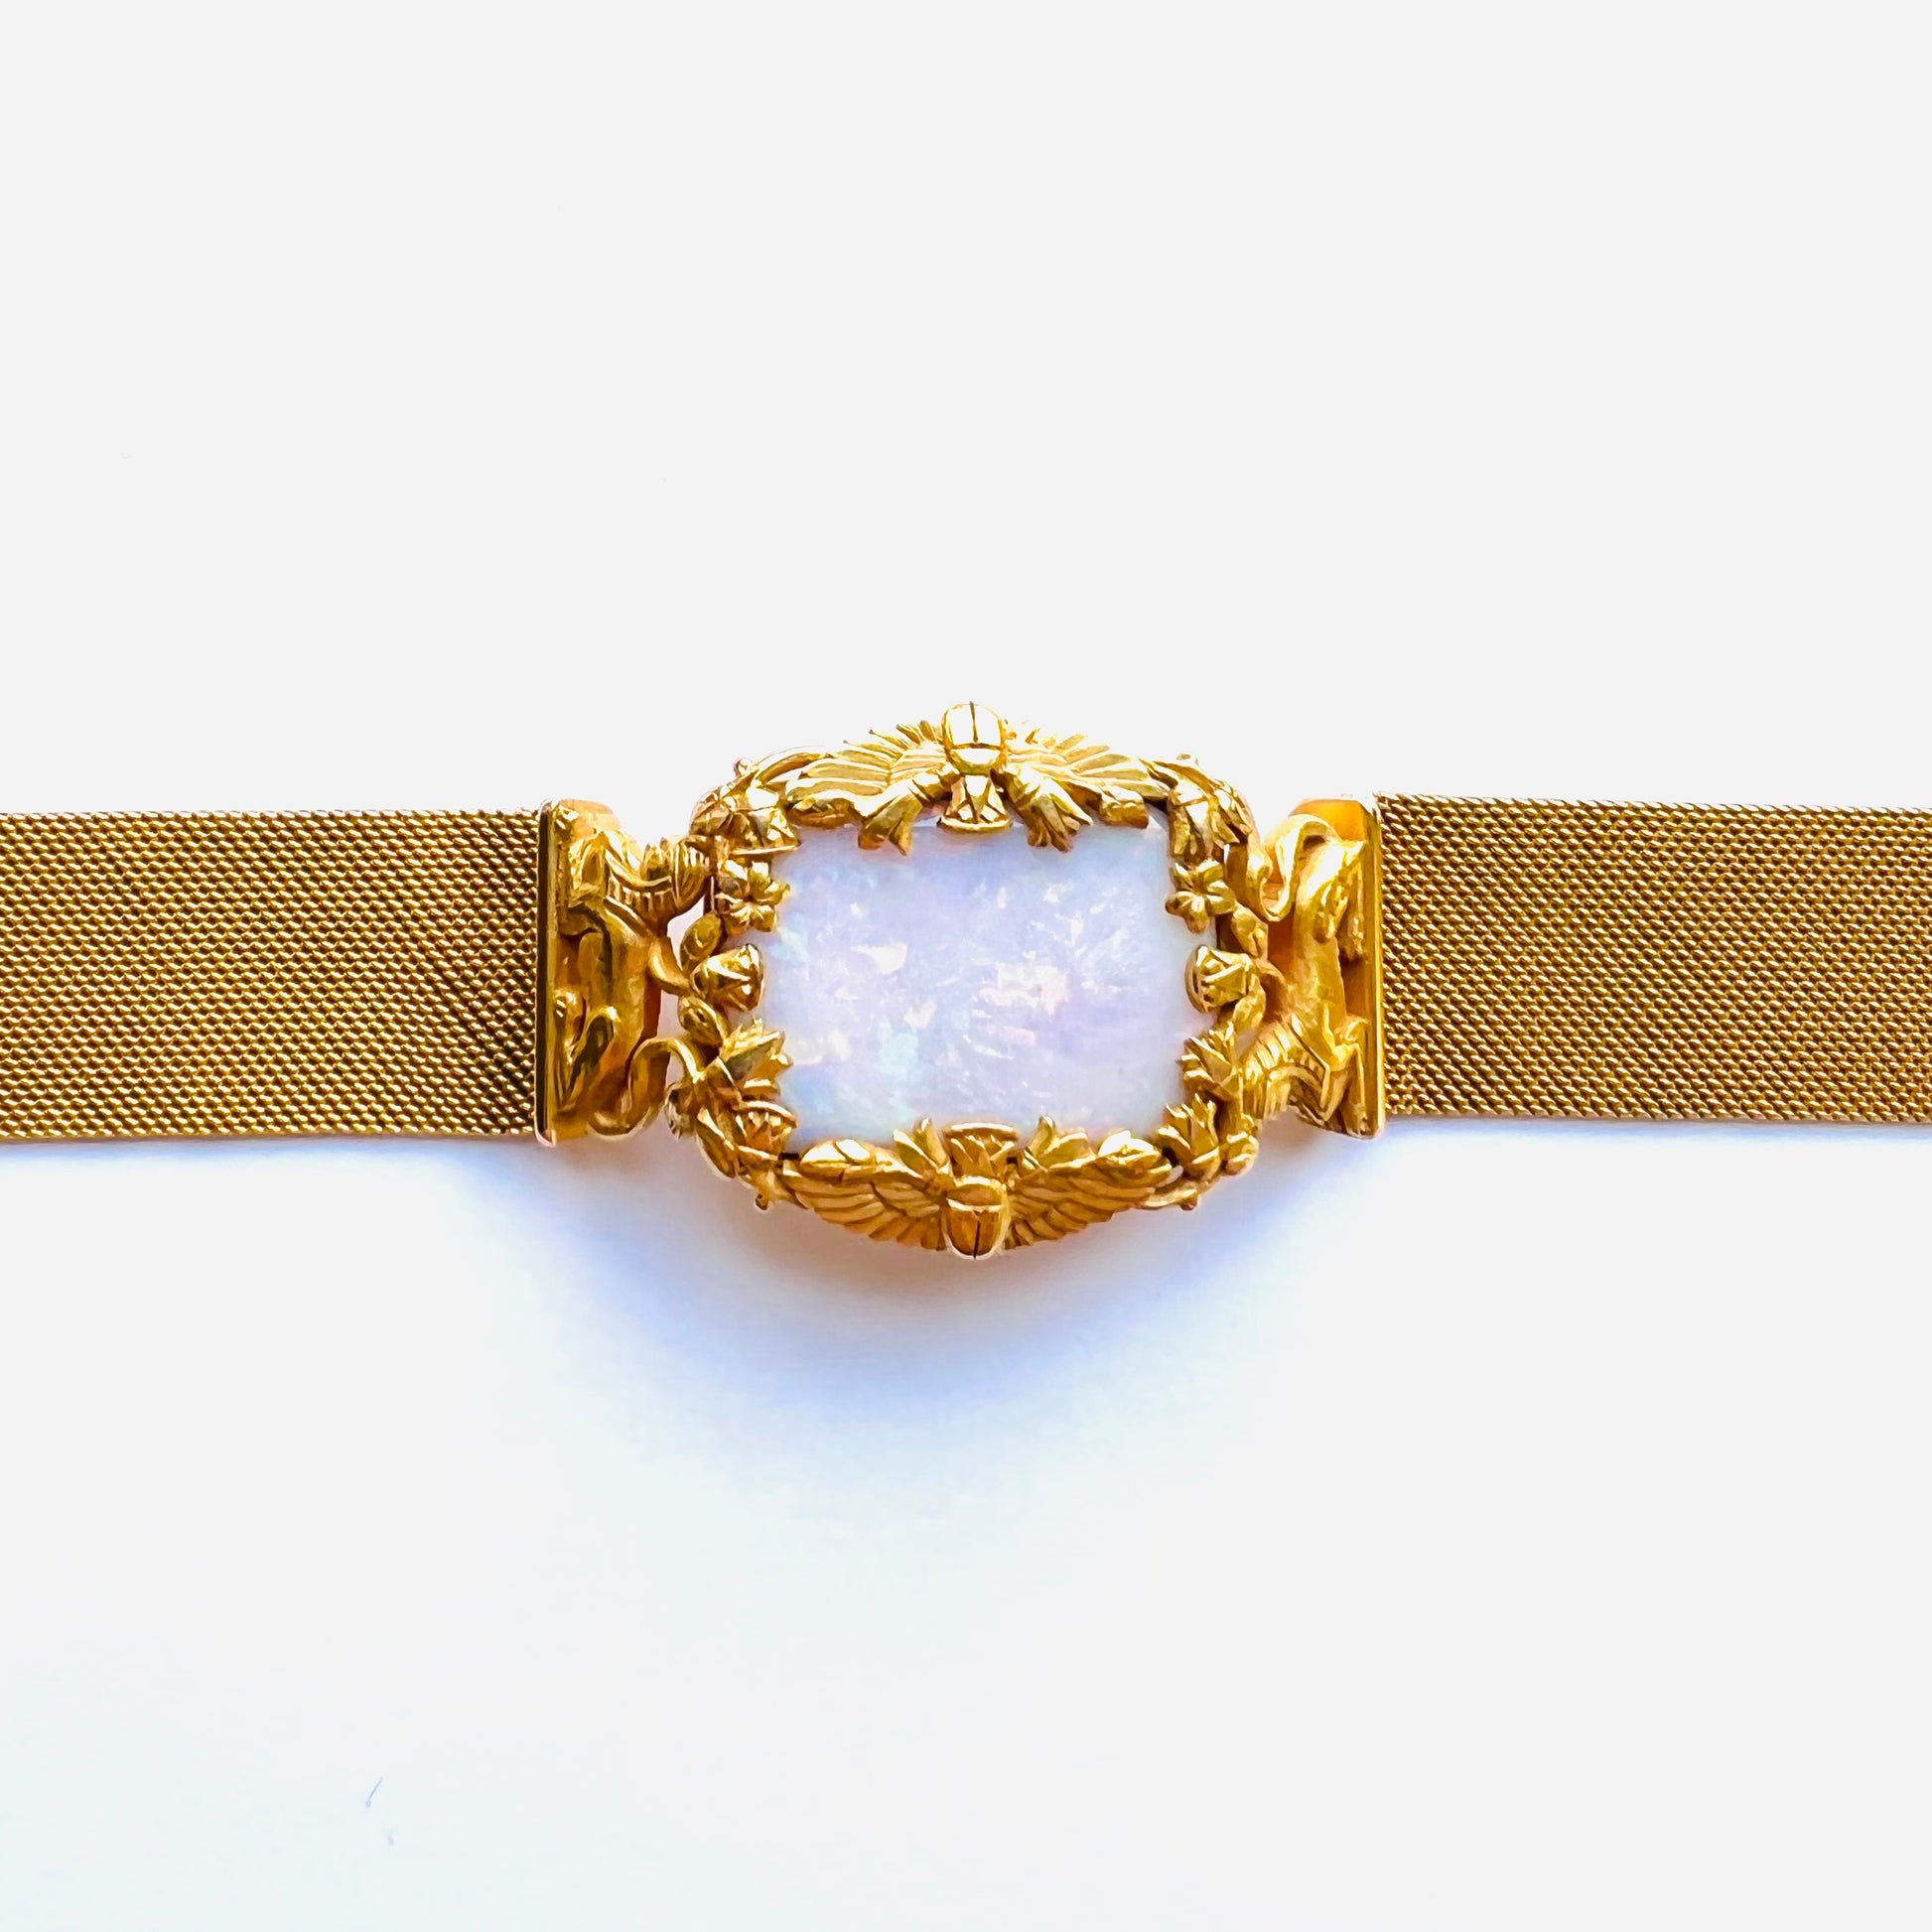 Jaques & Marcus Antique 18KT Yellow Gold Opal Bracelet laid out front view